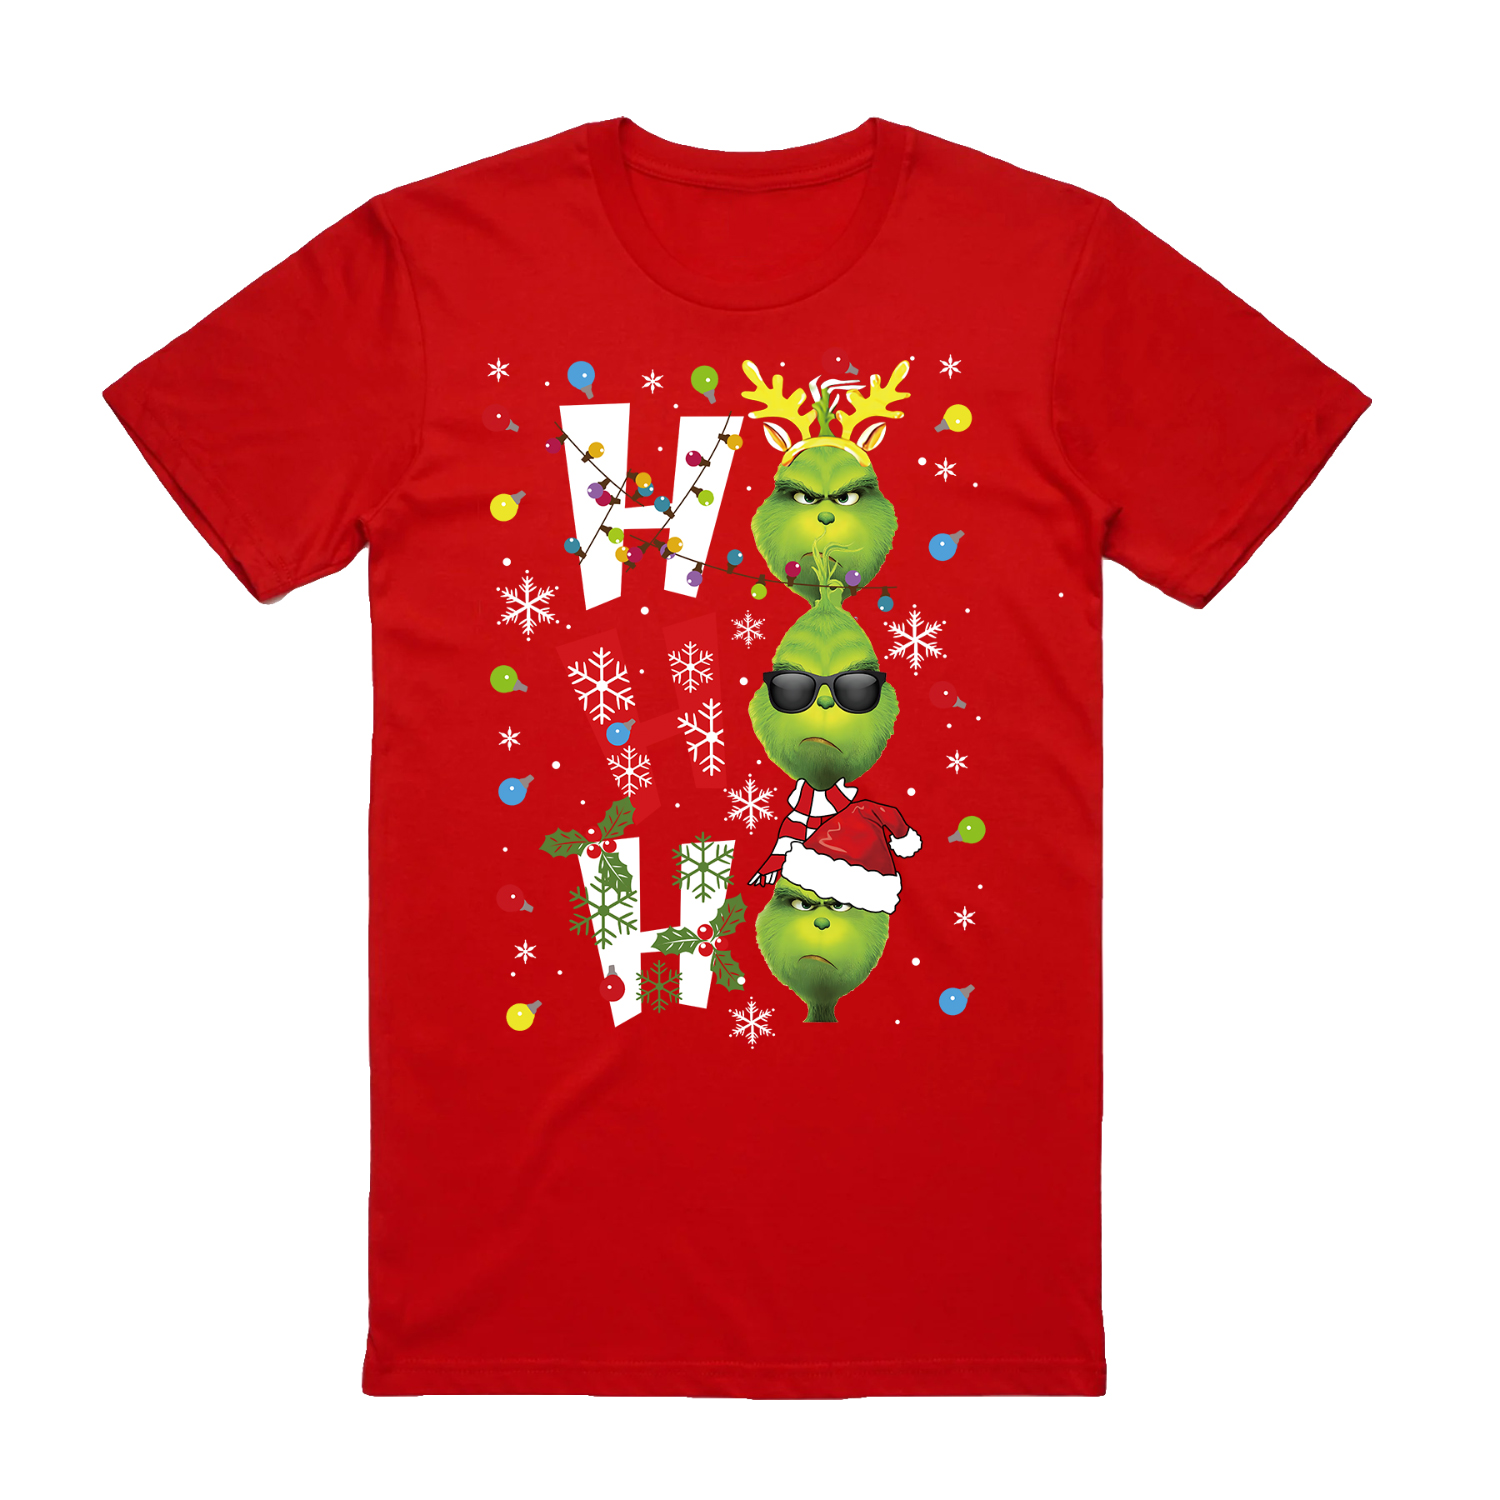 100% Cotton Christmas T-shirt Adult Unisex Tee Tops - Shrek